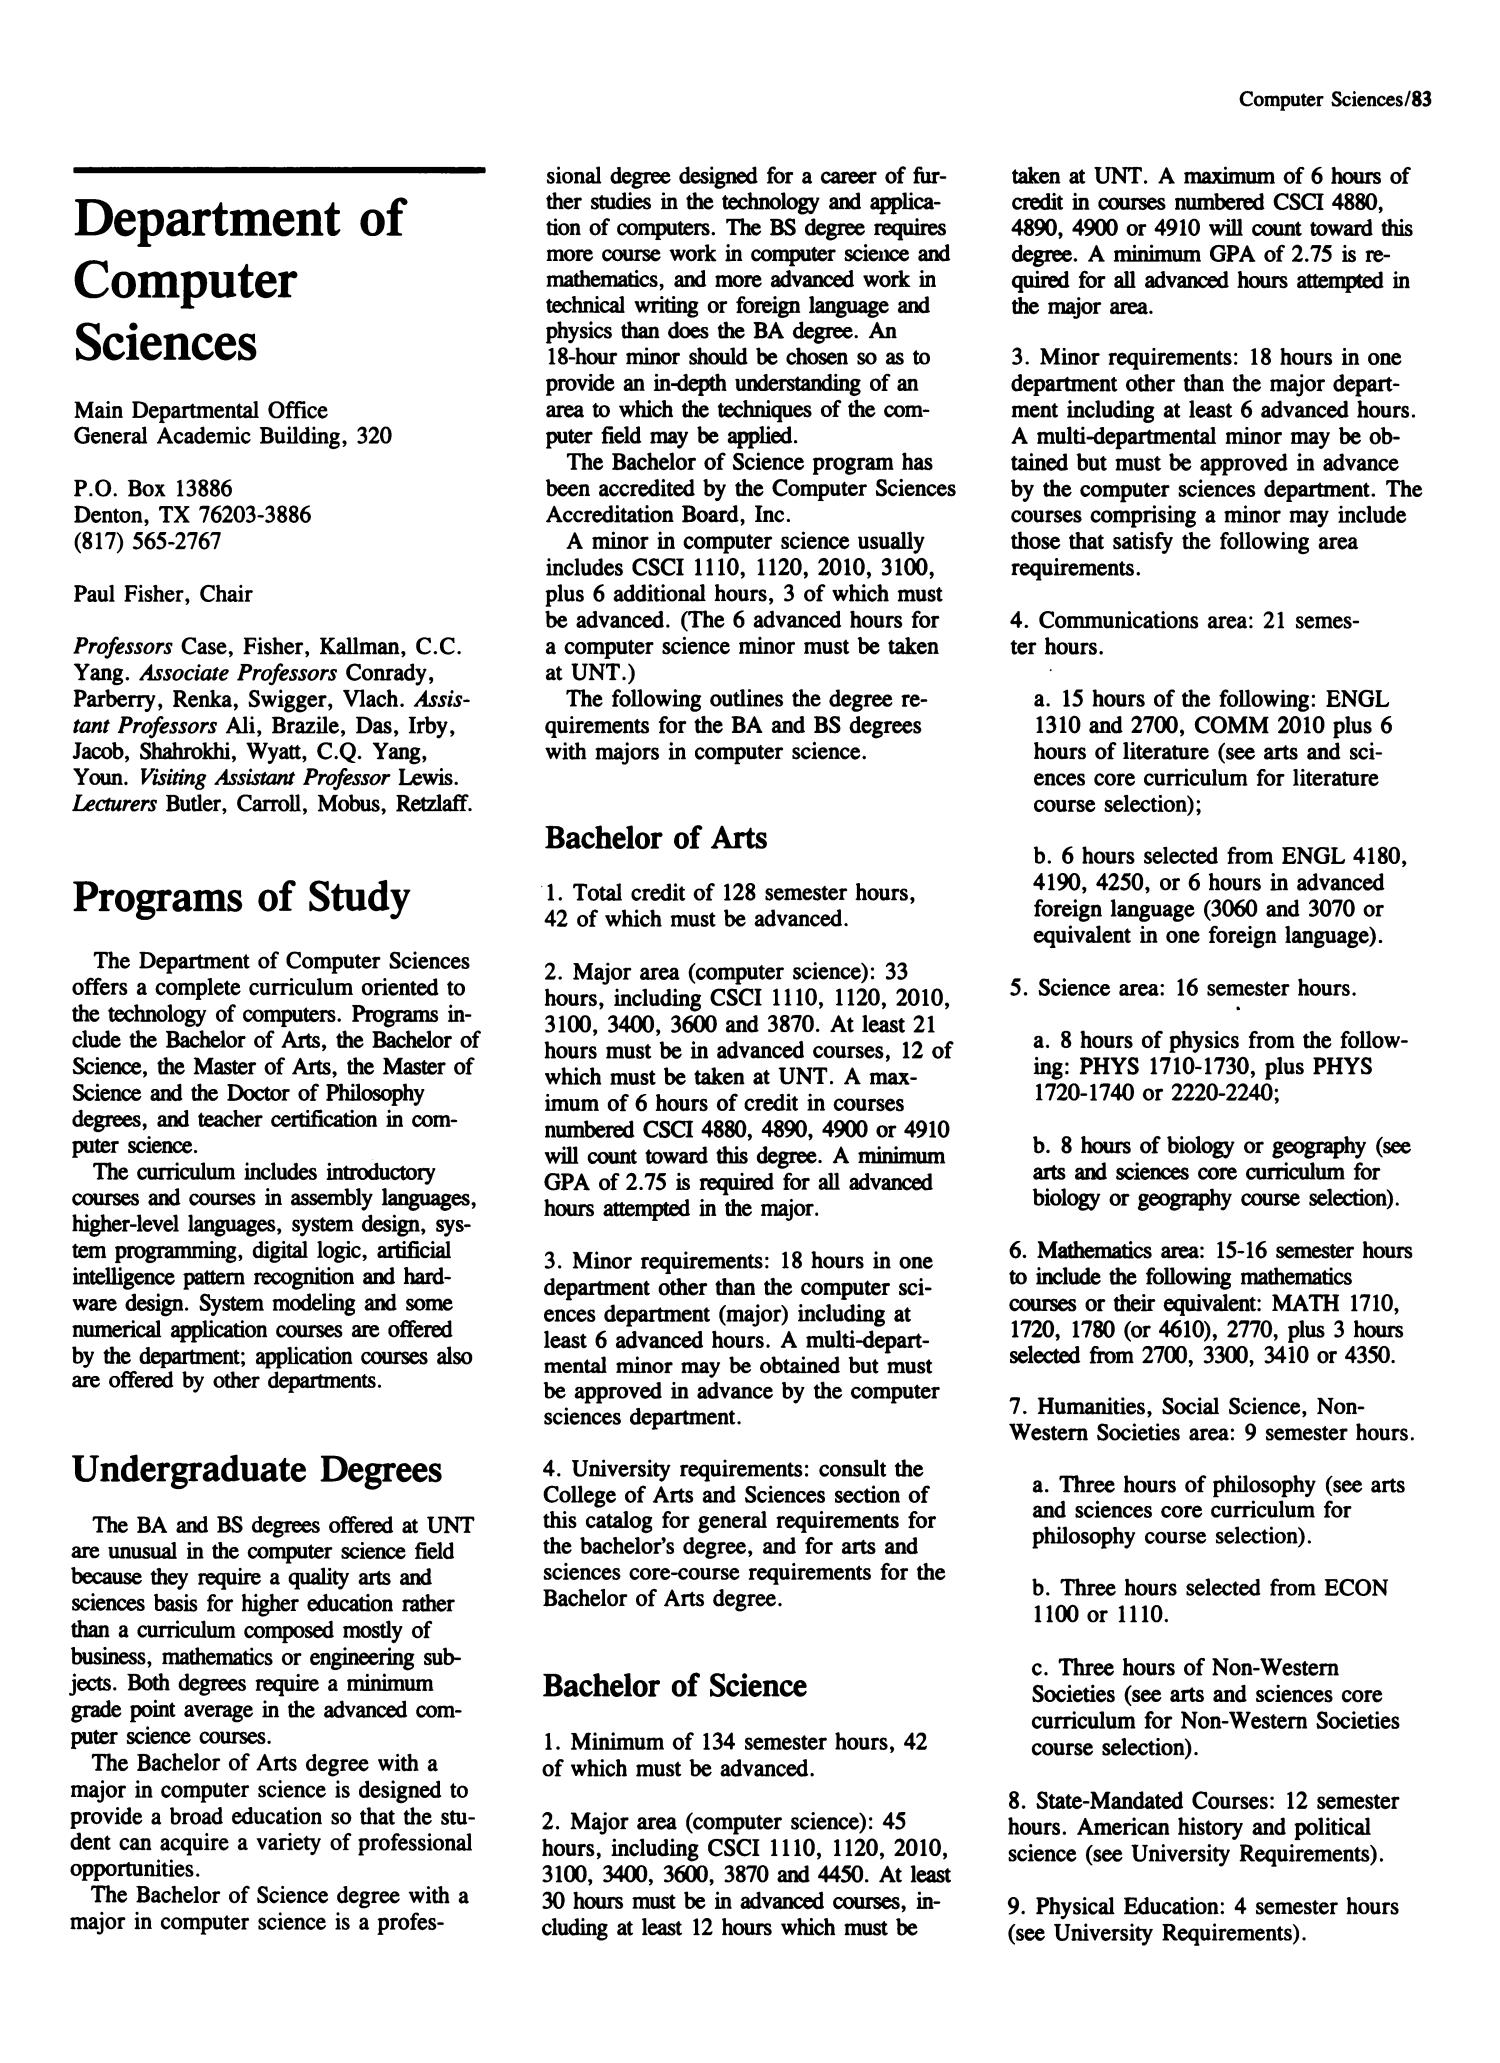 Catalog of the University of North Texas, 1991-1992, Undergraduate
                                                
                                                    83
                                                